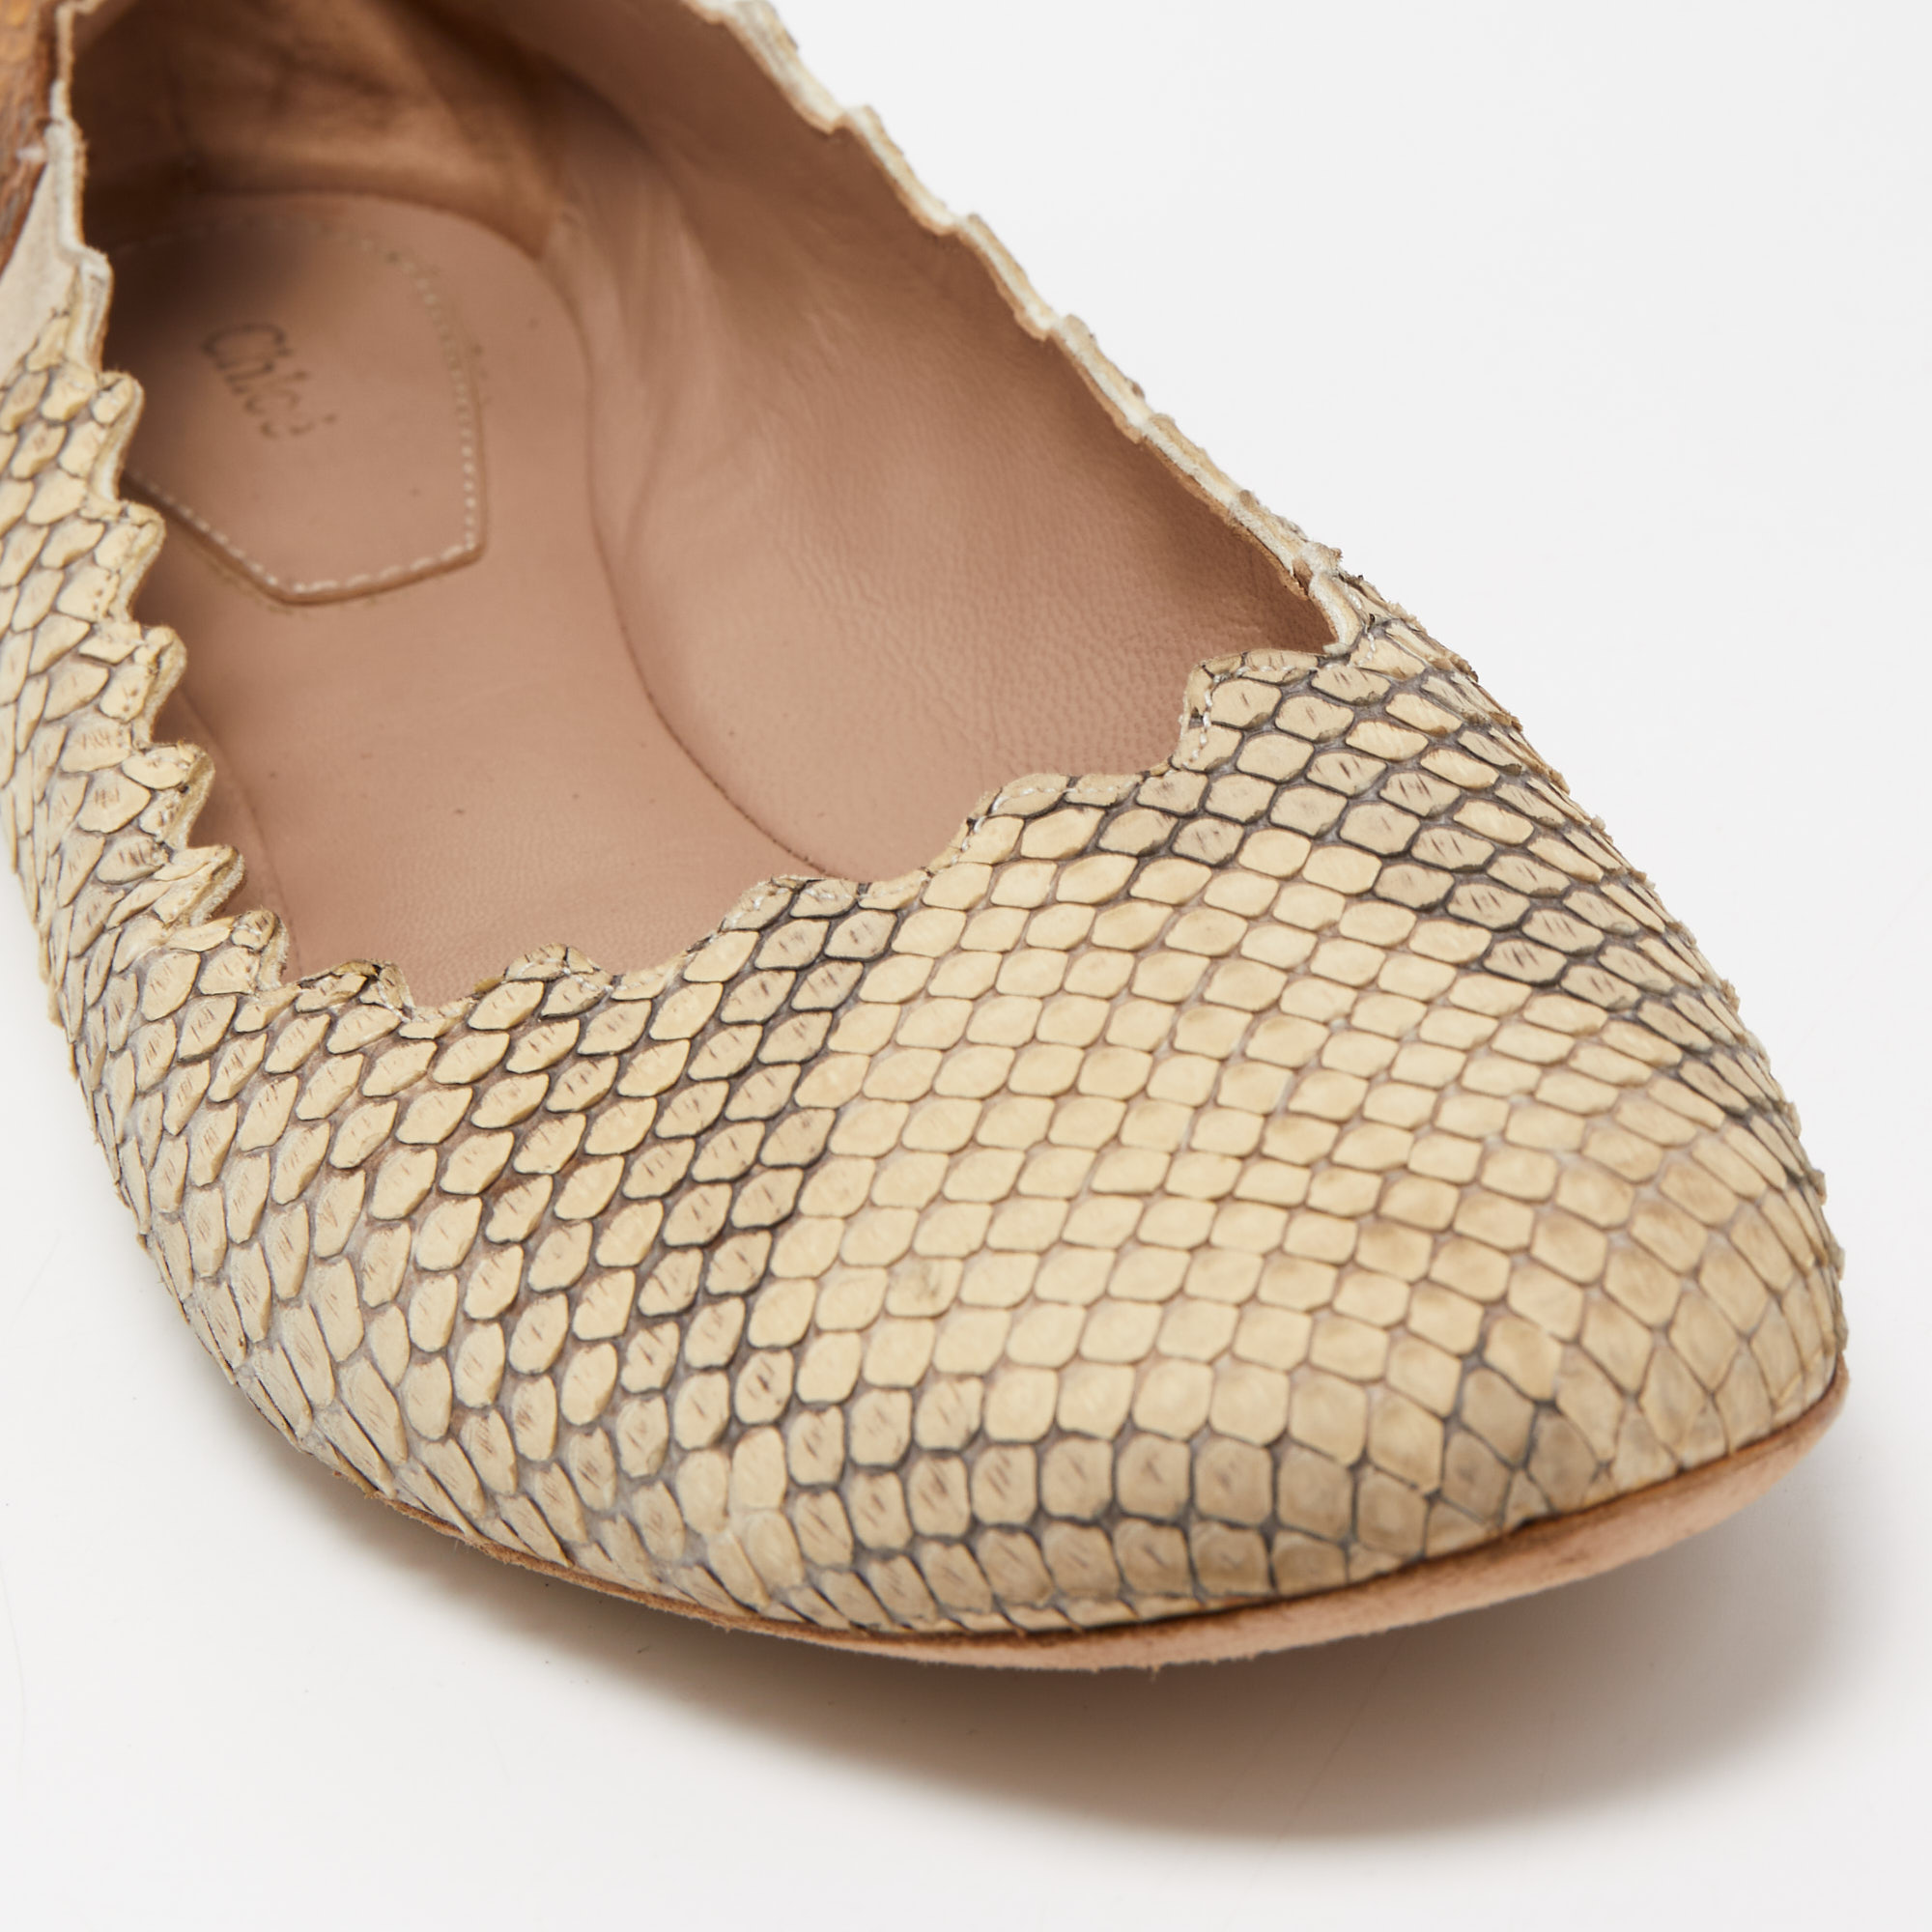 Chloe Cream/Brown Python Scalloped Accent Ballet Flats Size 38